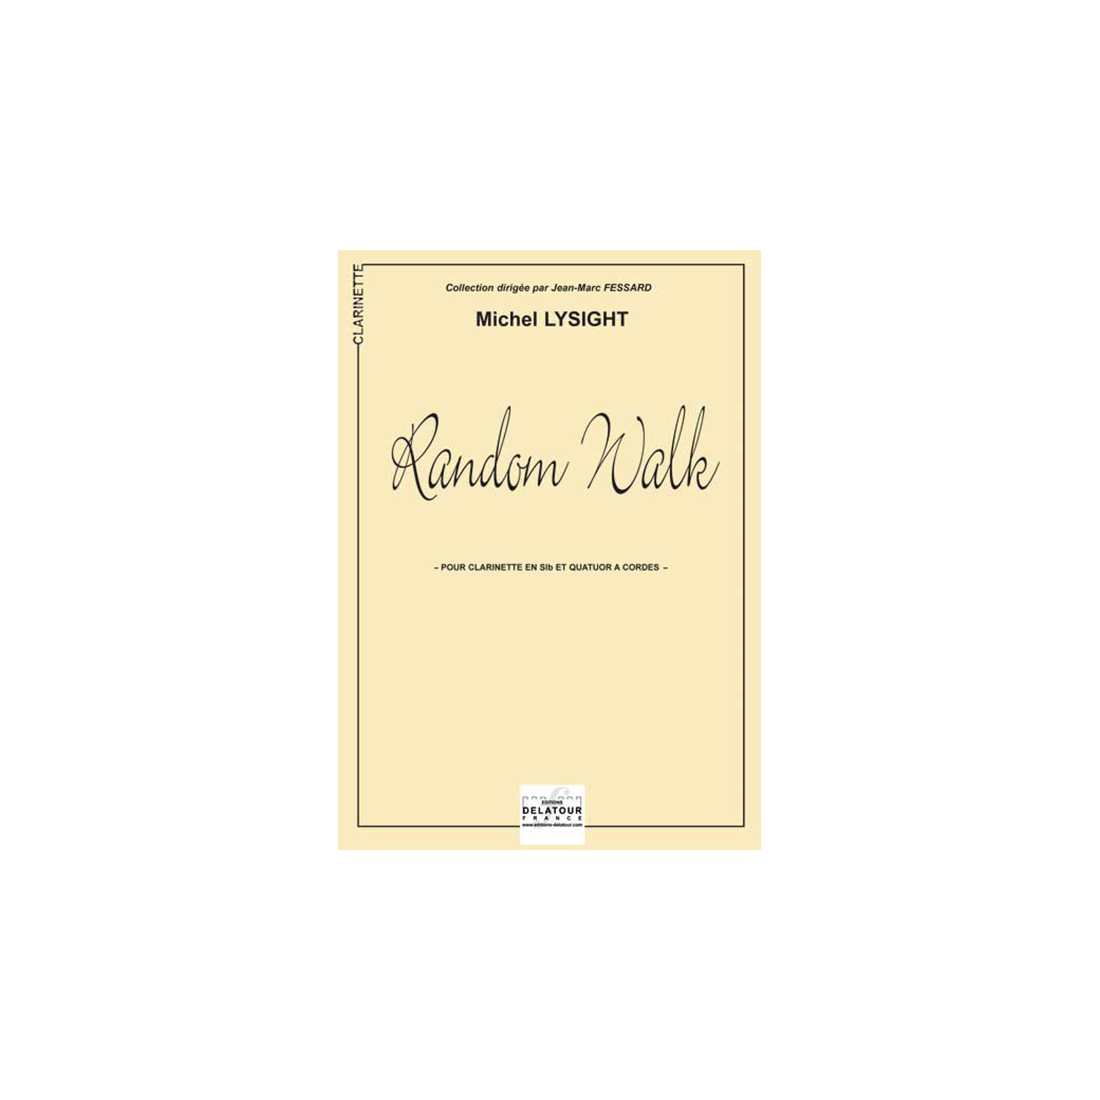 Random walk (version clarinette et quatuor à cordes)